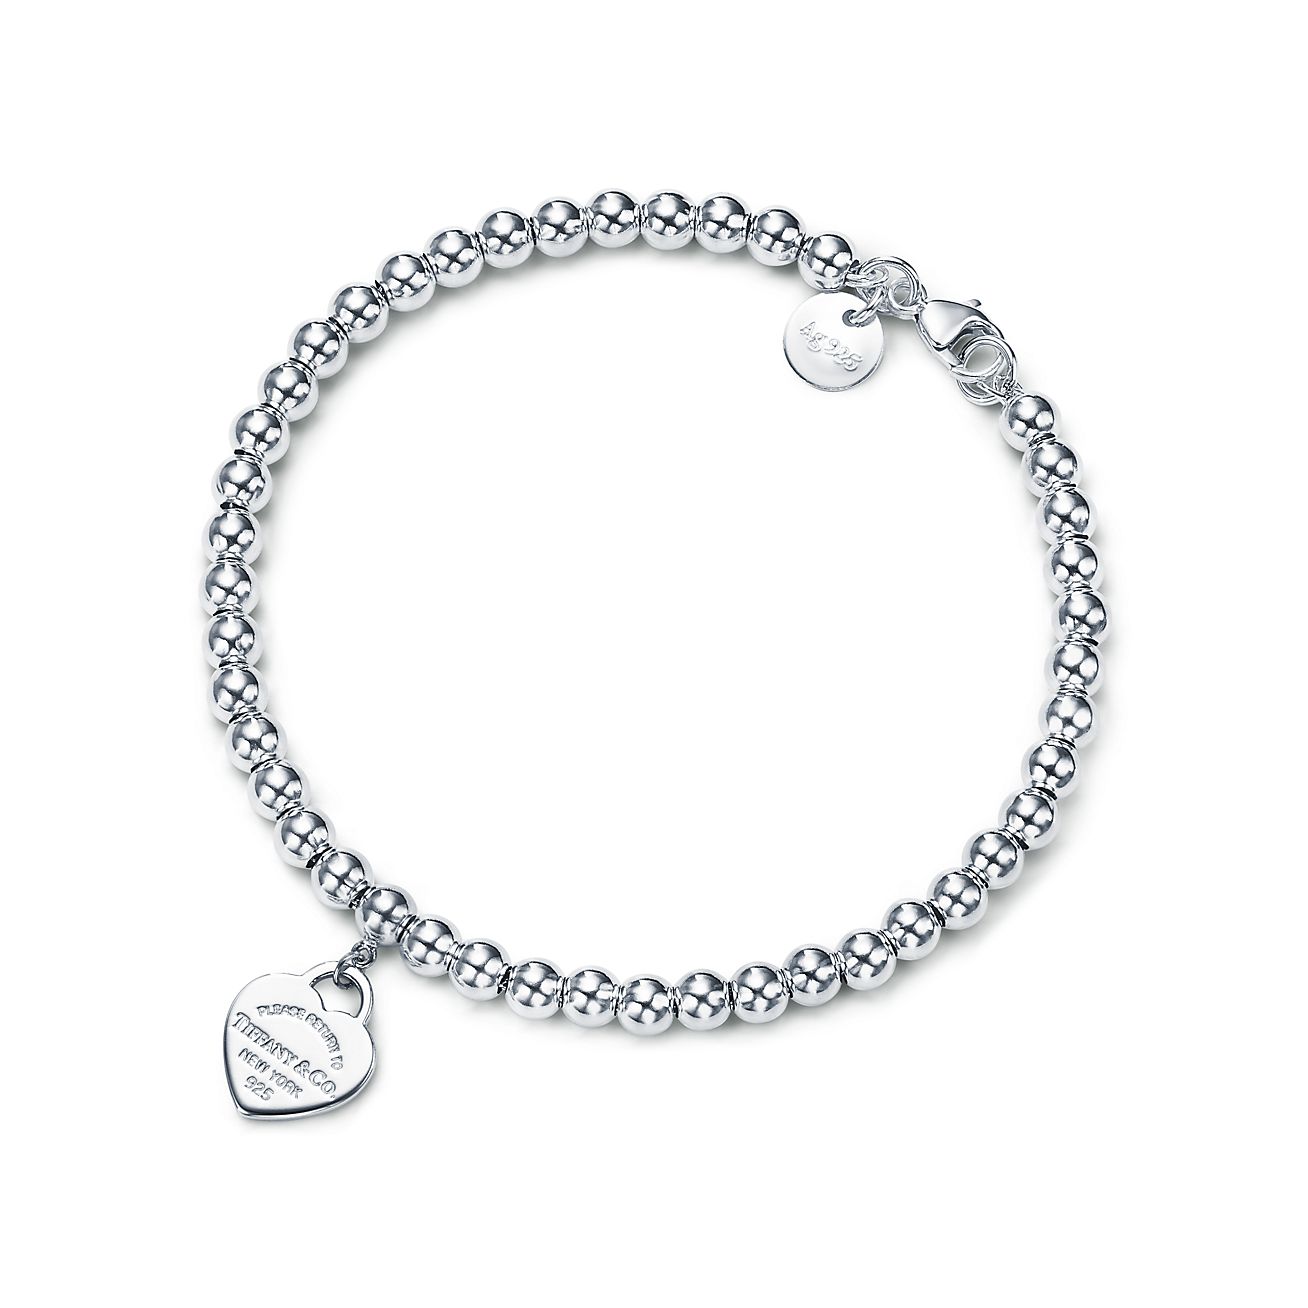 Share 86+ tiffany silver baby bracelet super hot